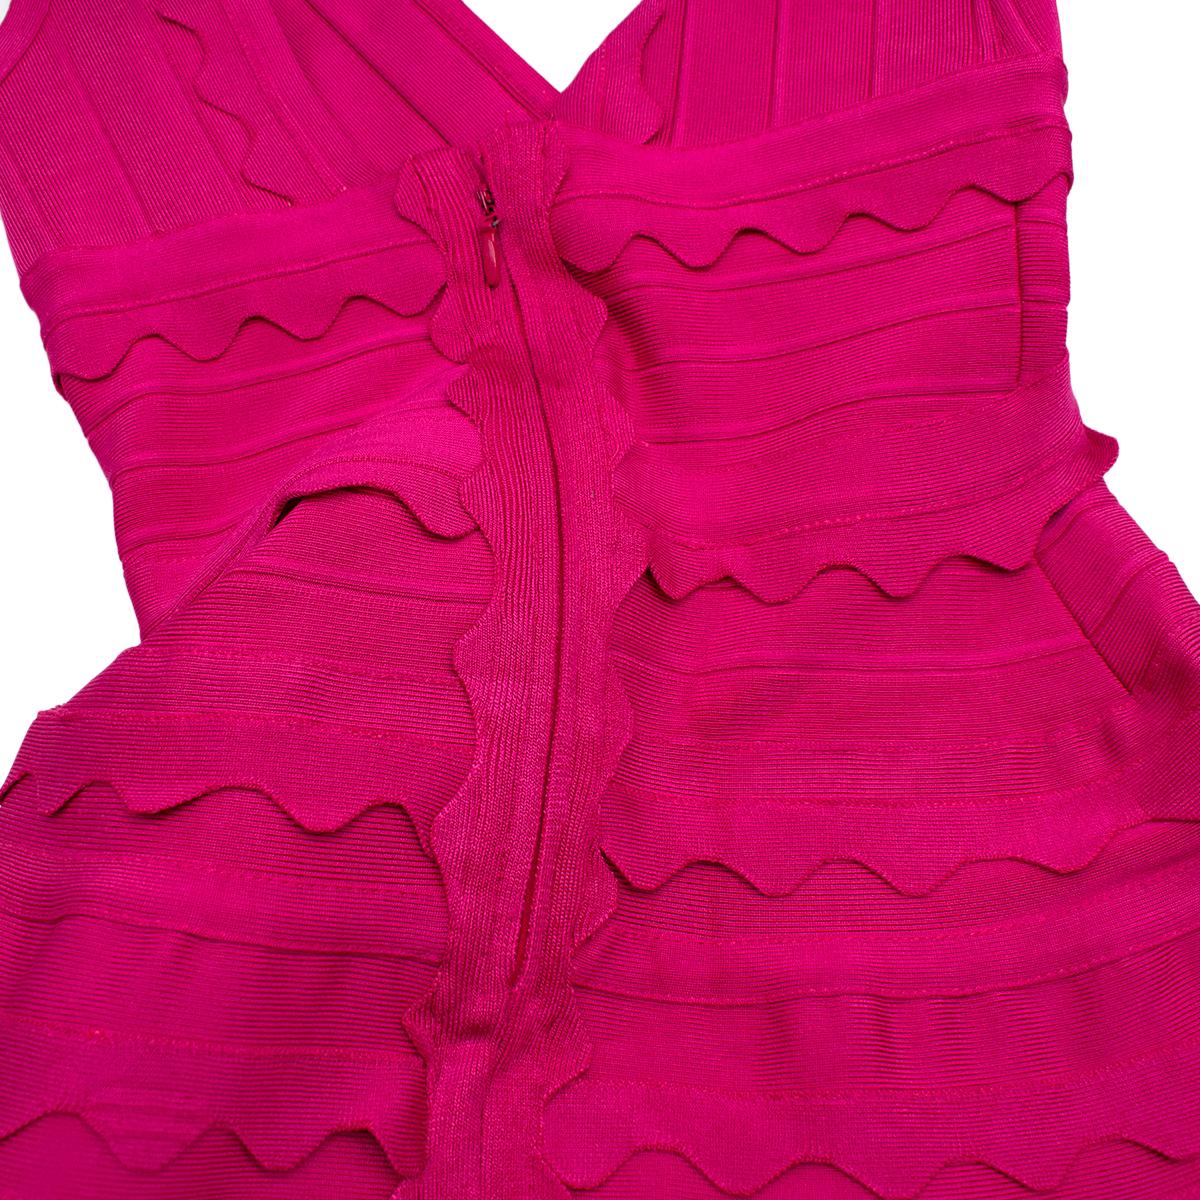 Herve Leger Nikayla Scalloped Edge Caprice Pink Dress  - Us size 6 For Sale 5